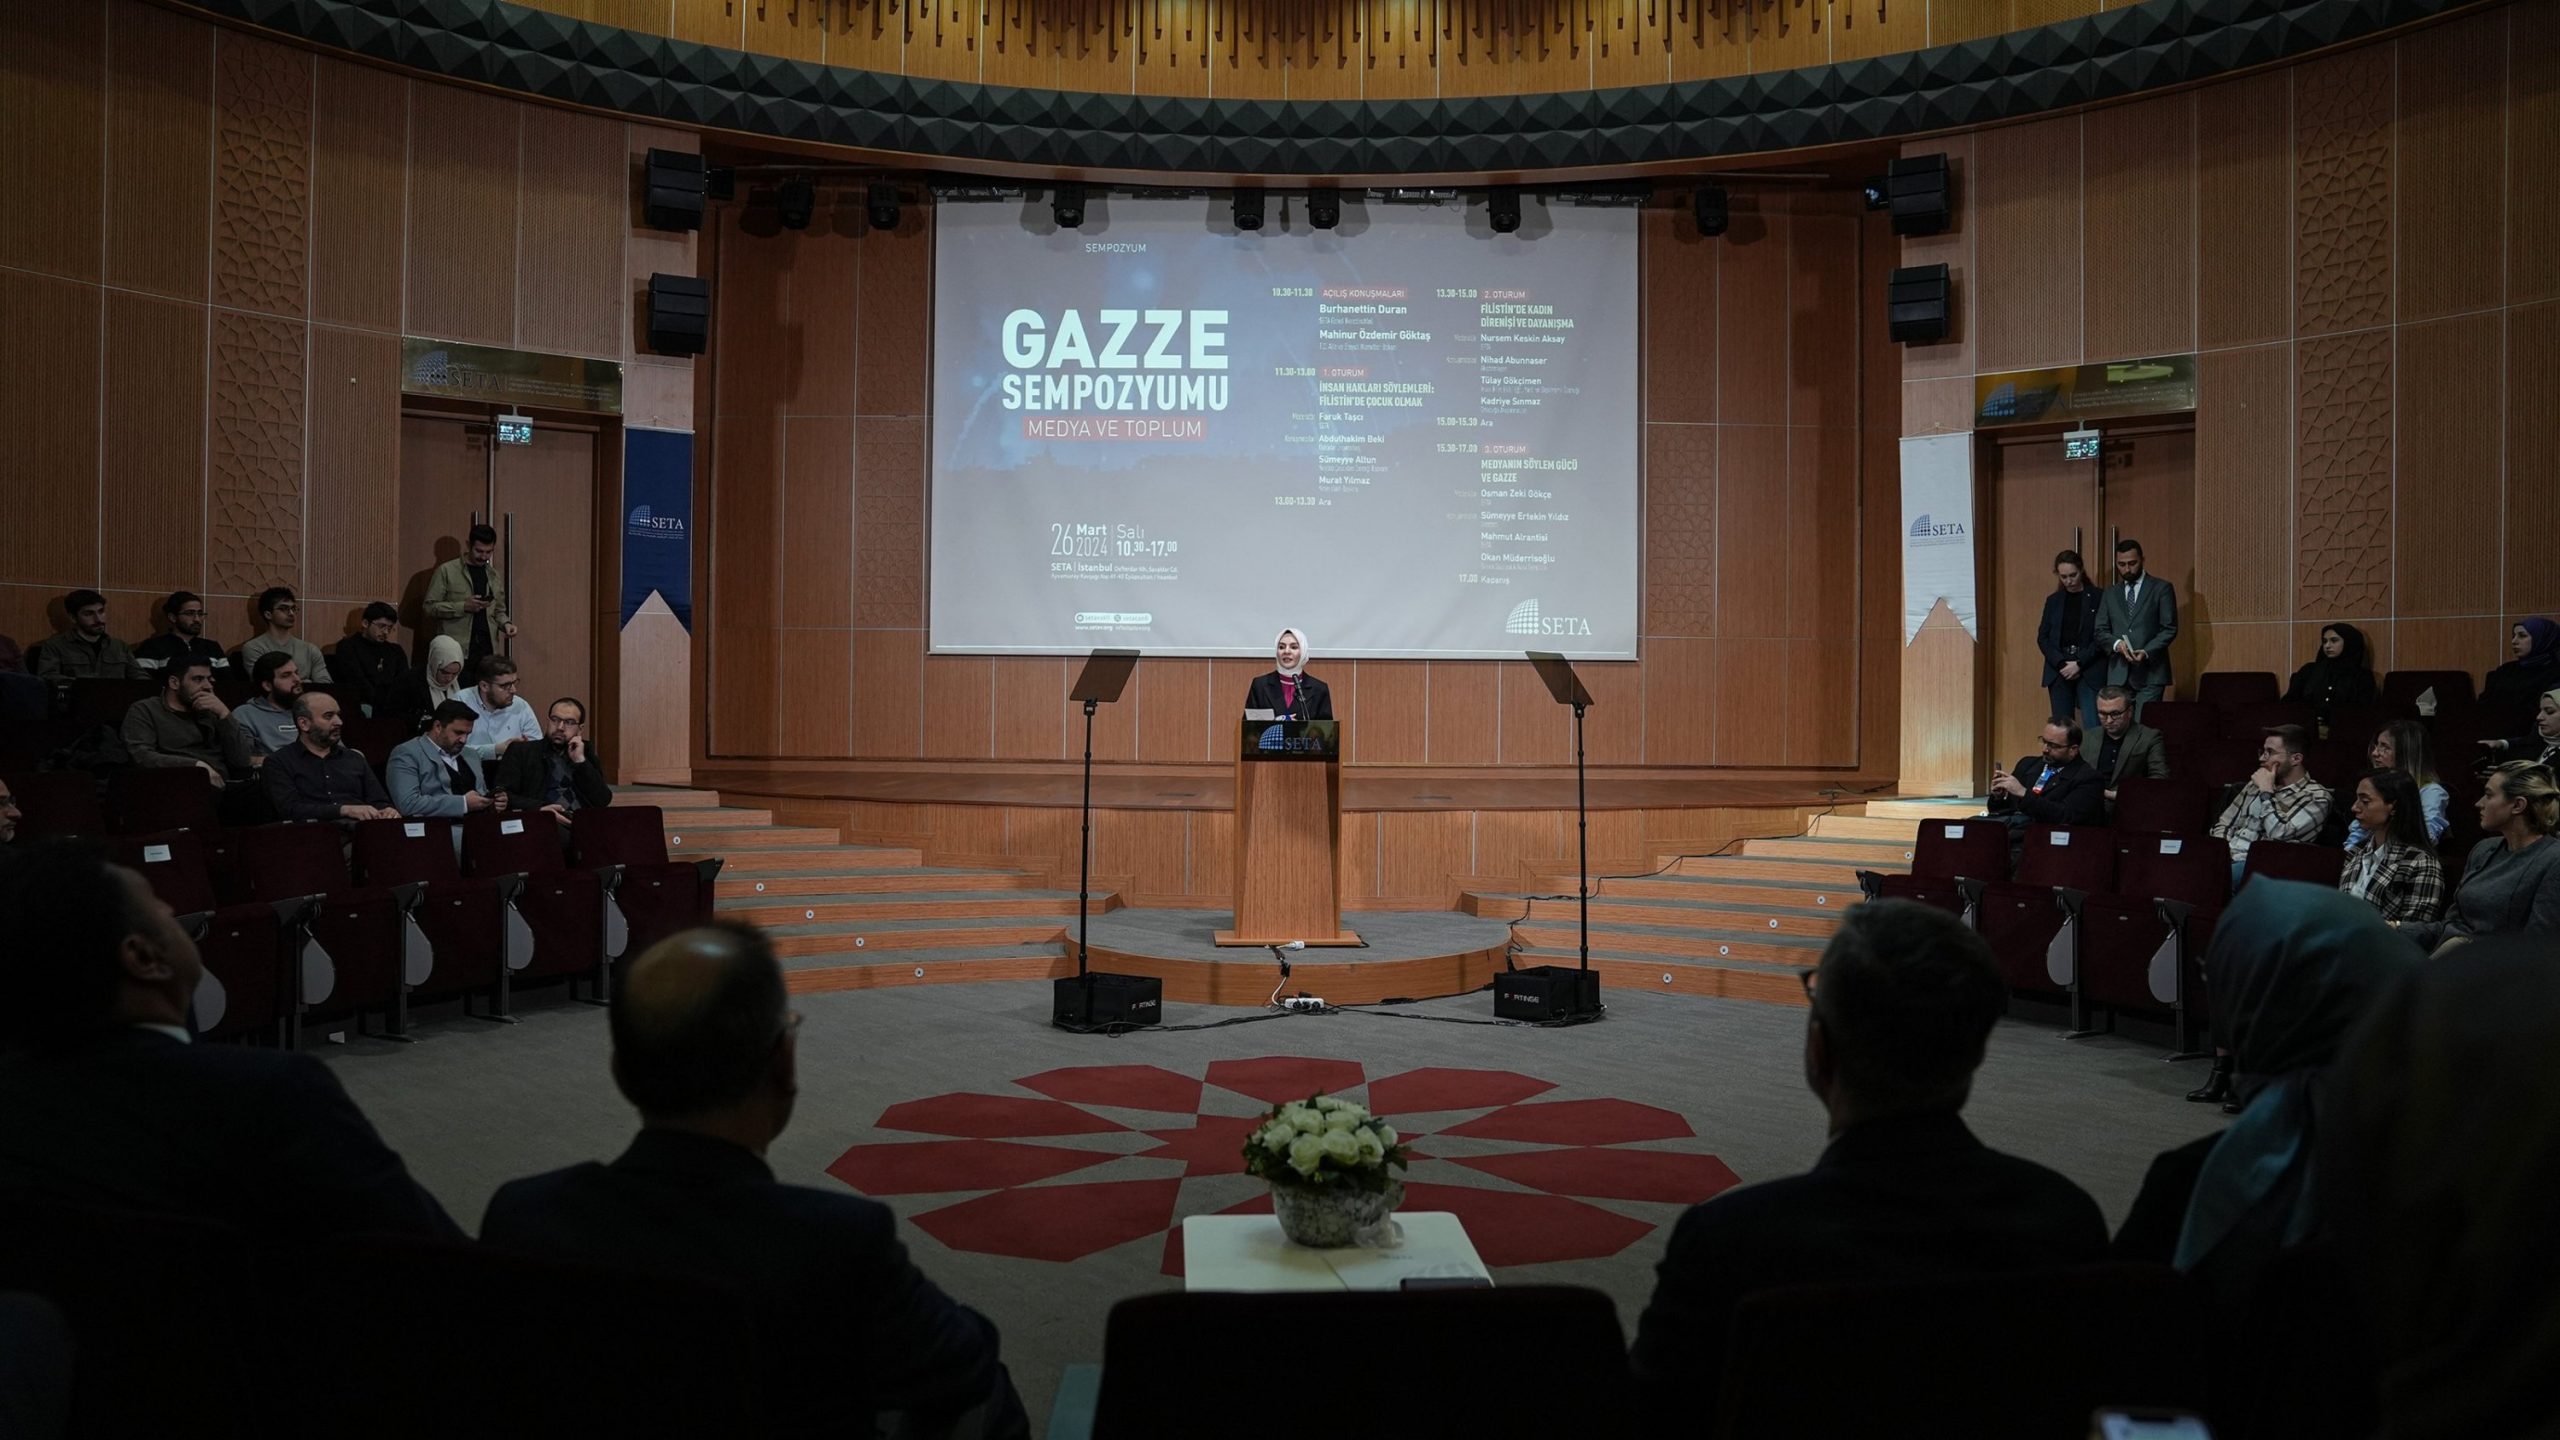 SETA symposium in Istanbul highlights Gaza crisis